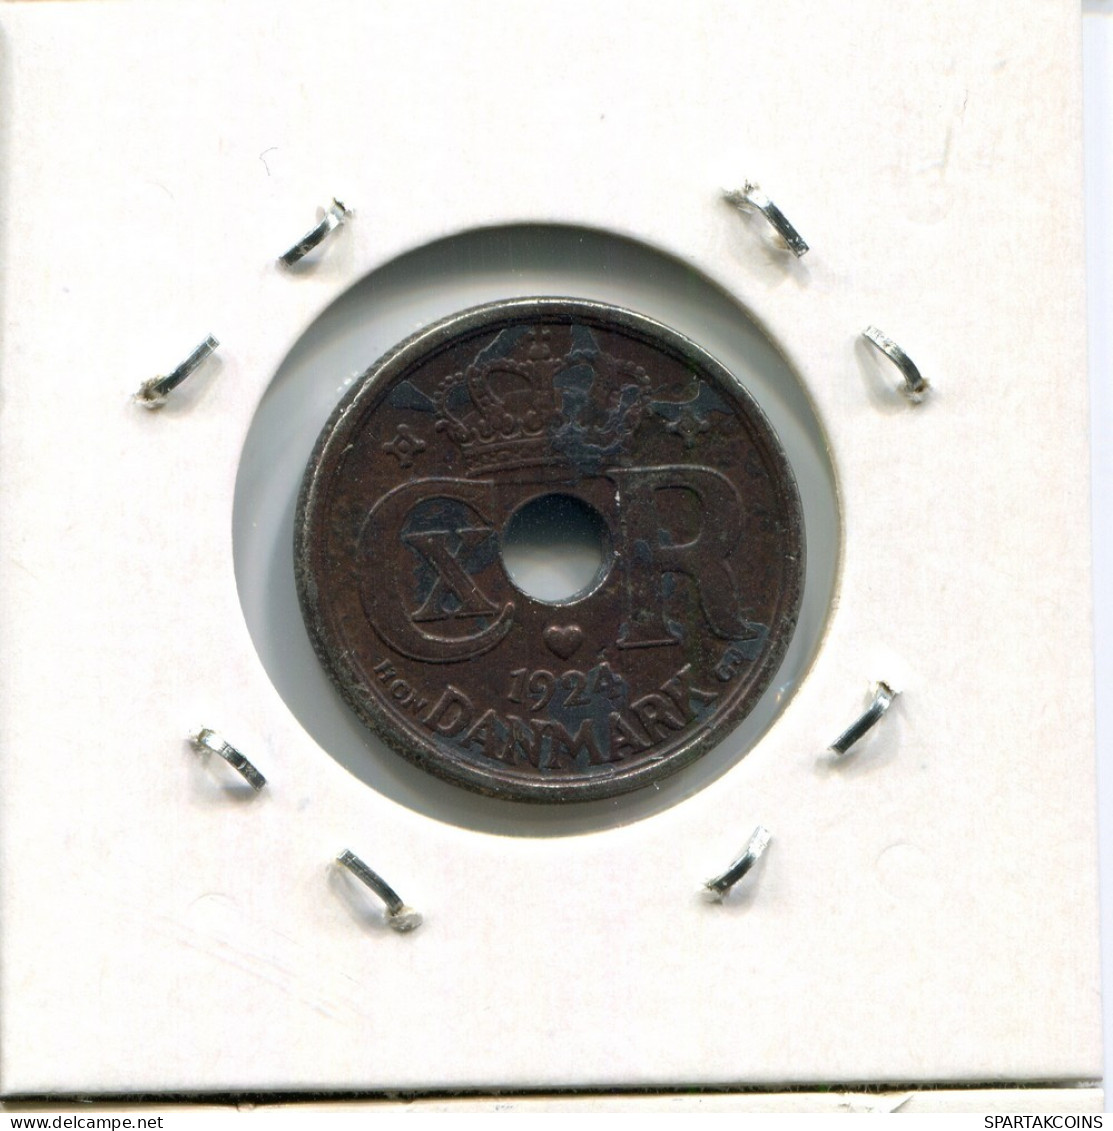 25 ORE 1924 DENMARK Coin #AR320.U.A - Denmark